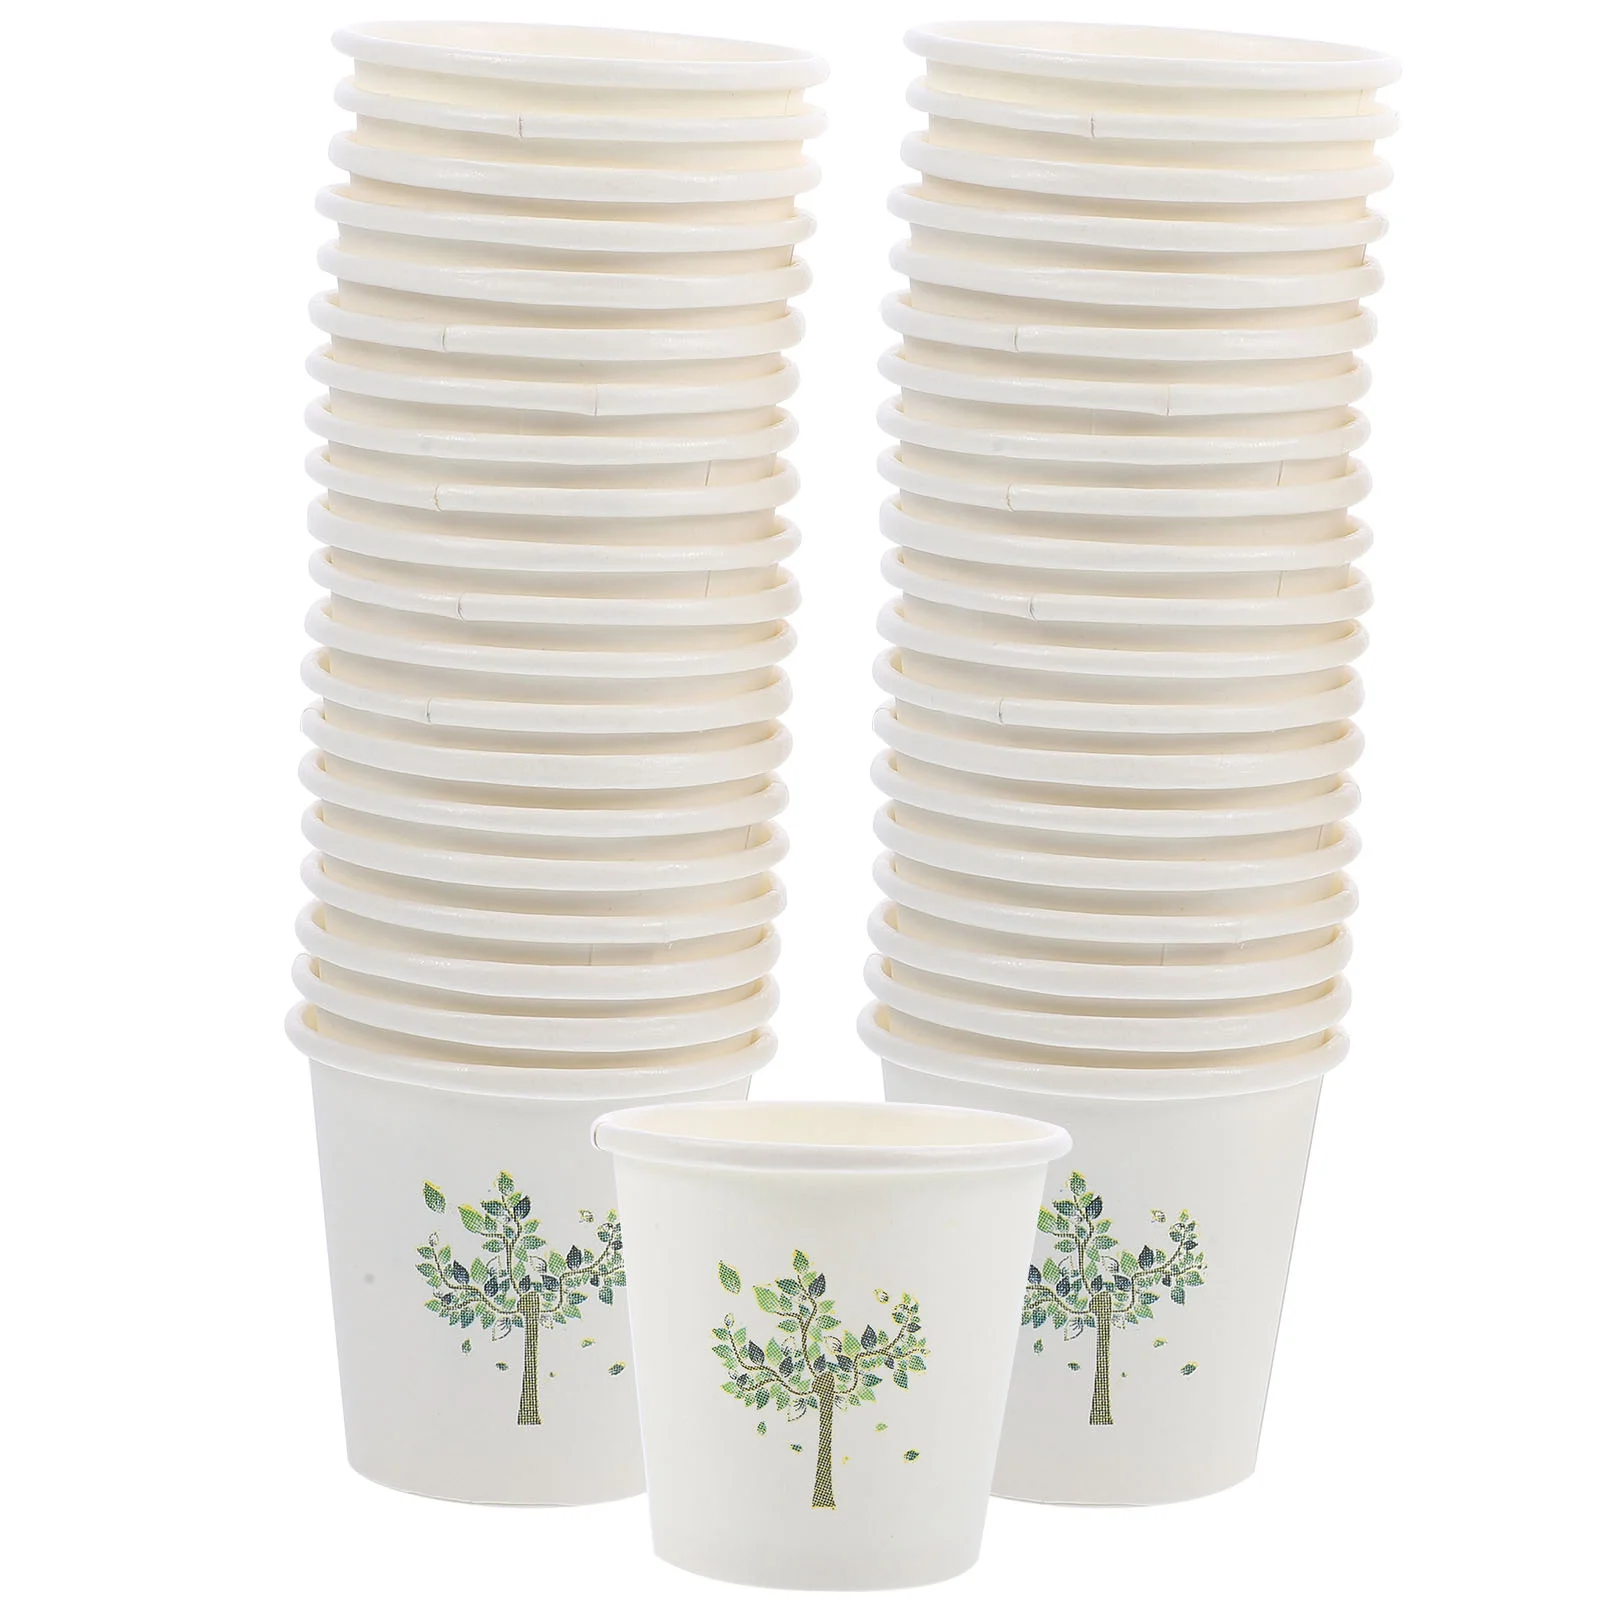 

500 Pcs Coffee Mugs Tasting Cup Small Disposable Cups Glass 3 Oz 3oz Paper Bulk Bathroom